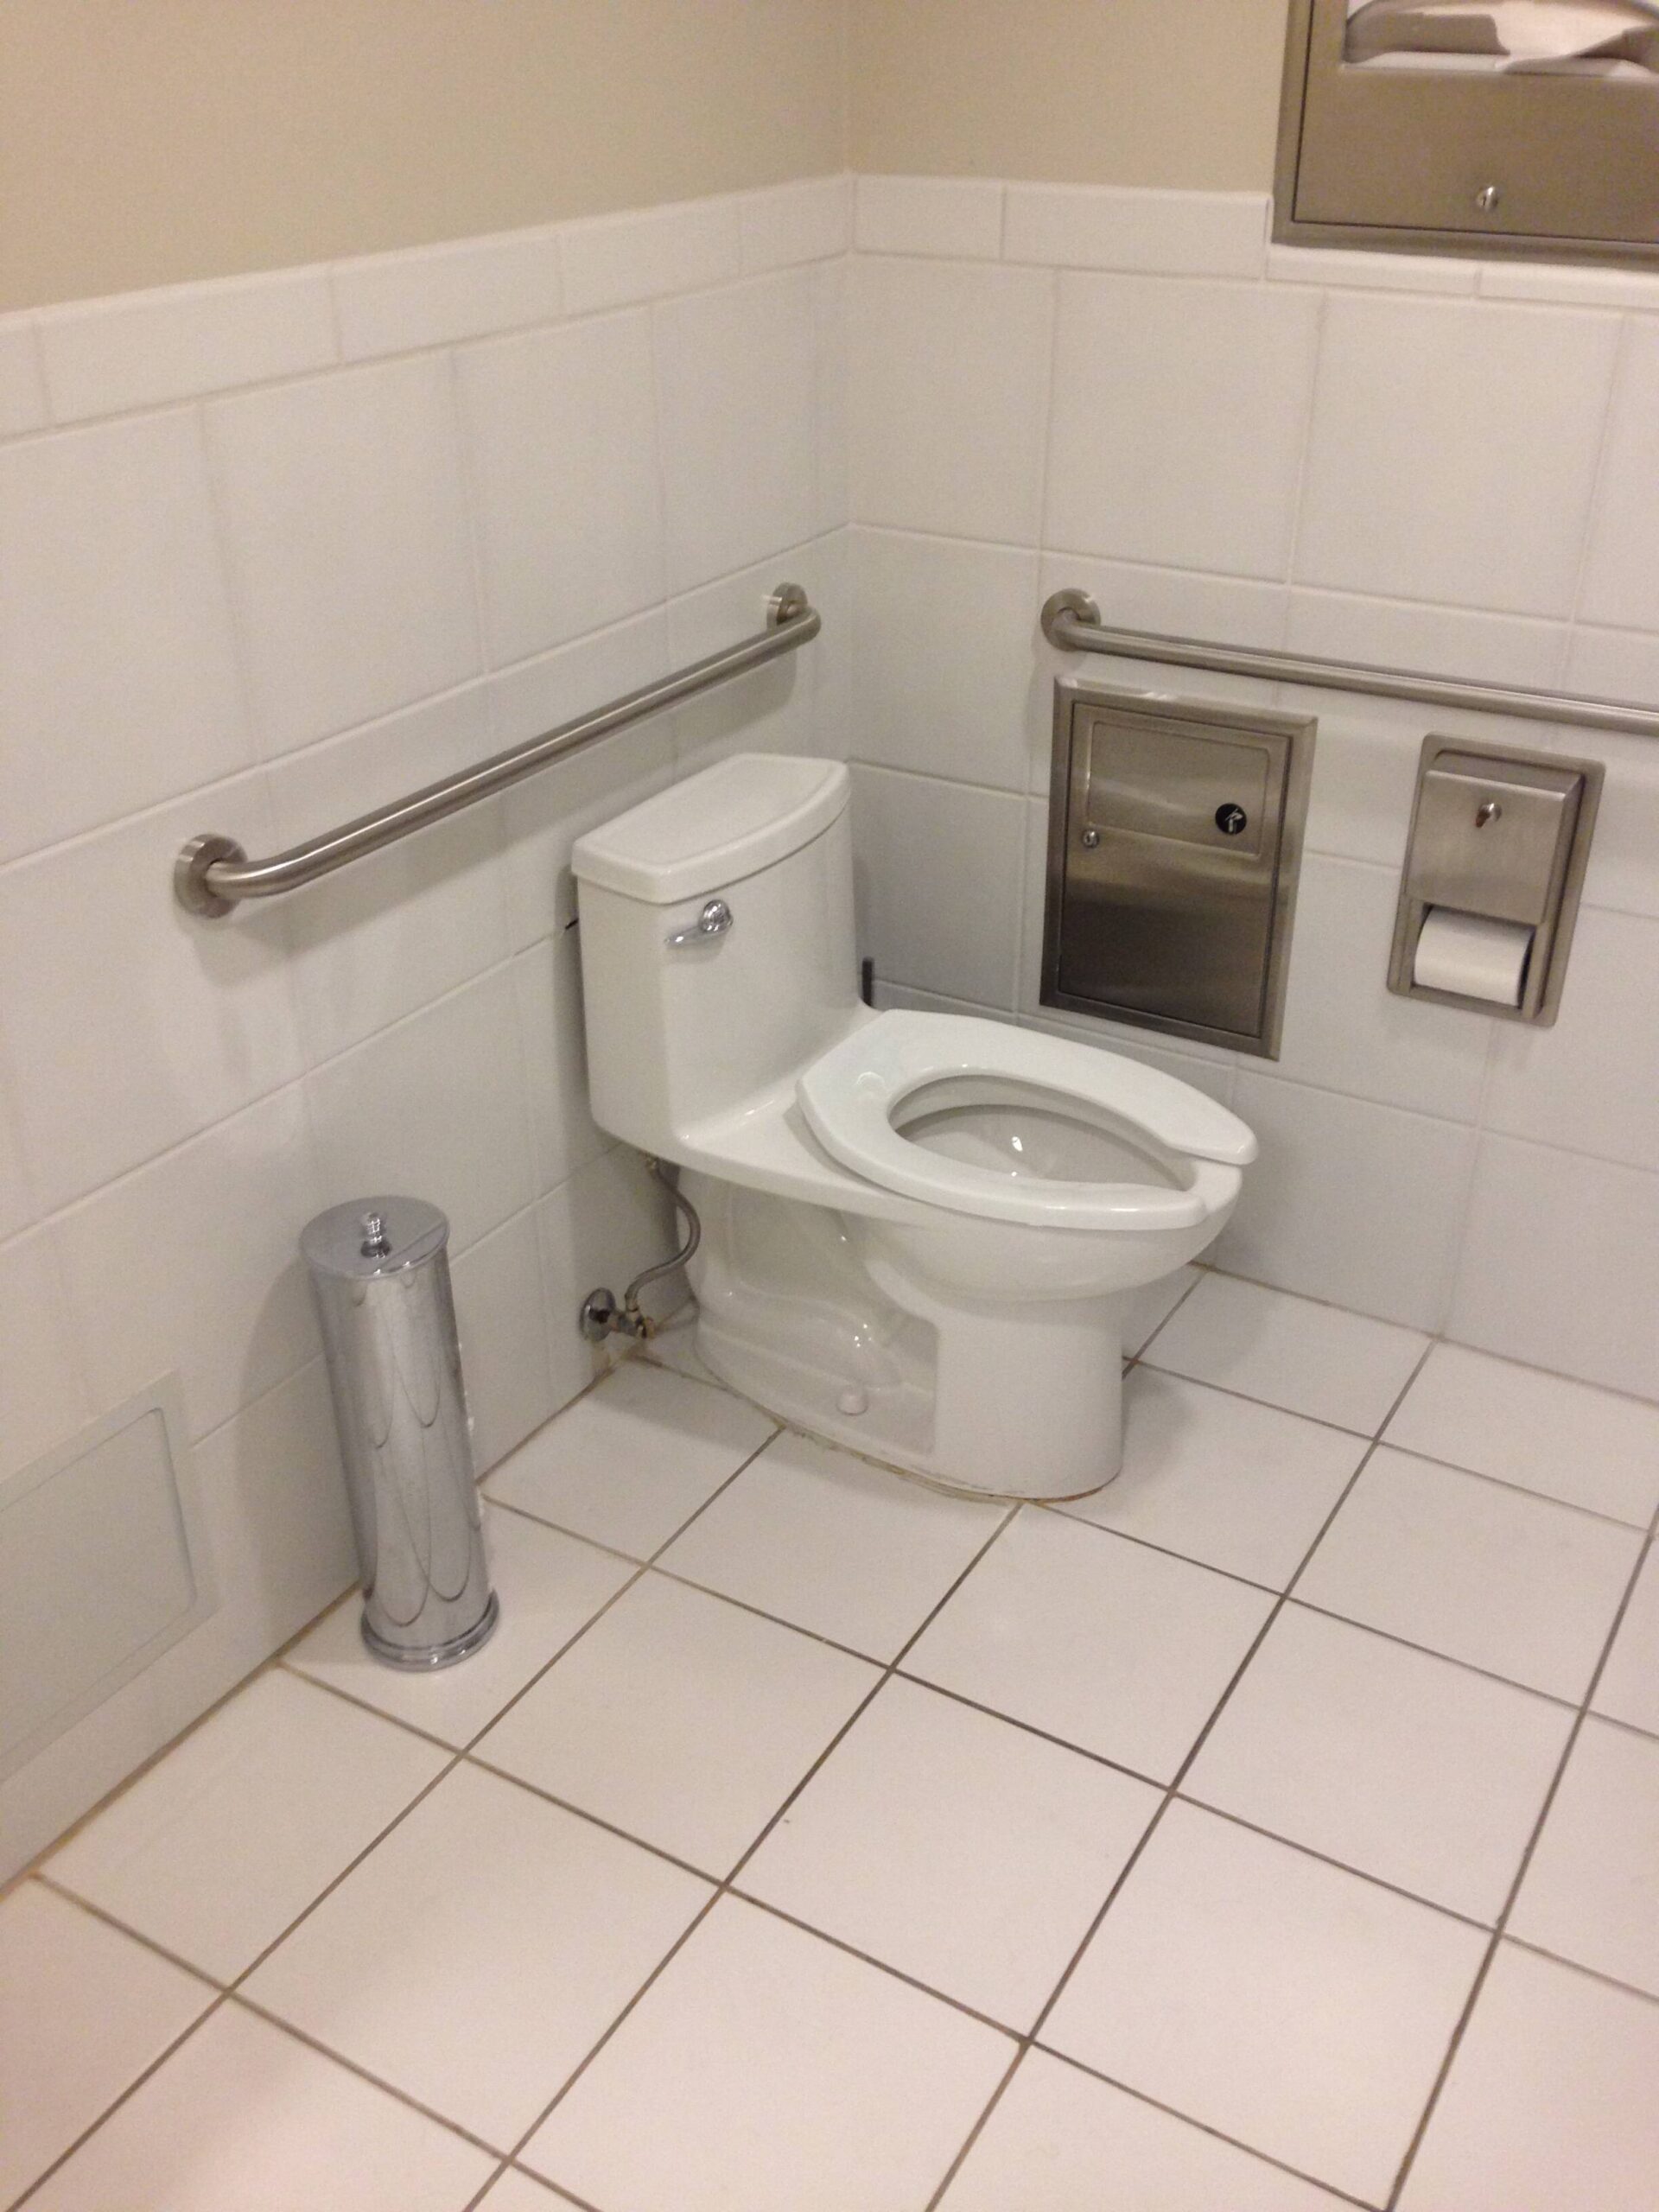 https://www.edwardsenterprisescc.com/wp-content/uploads/2018/02/plumbing-toilet-replace-chain-70-1-1920x2560.jpg